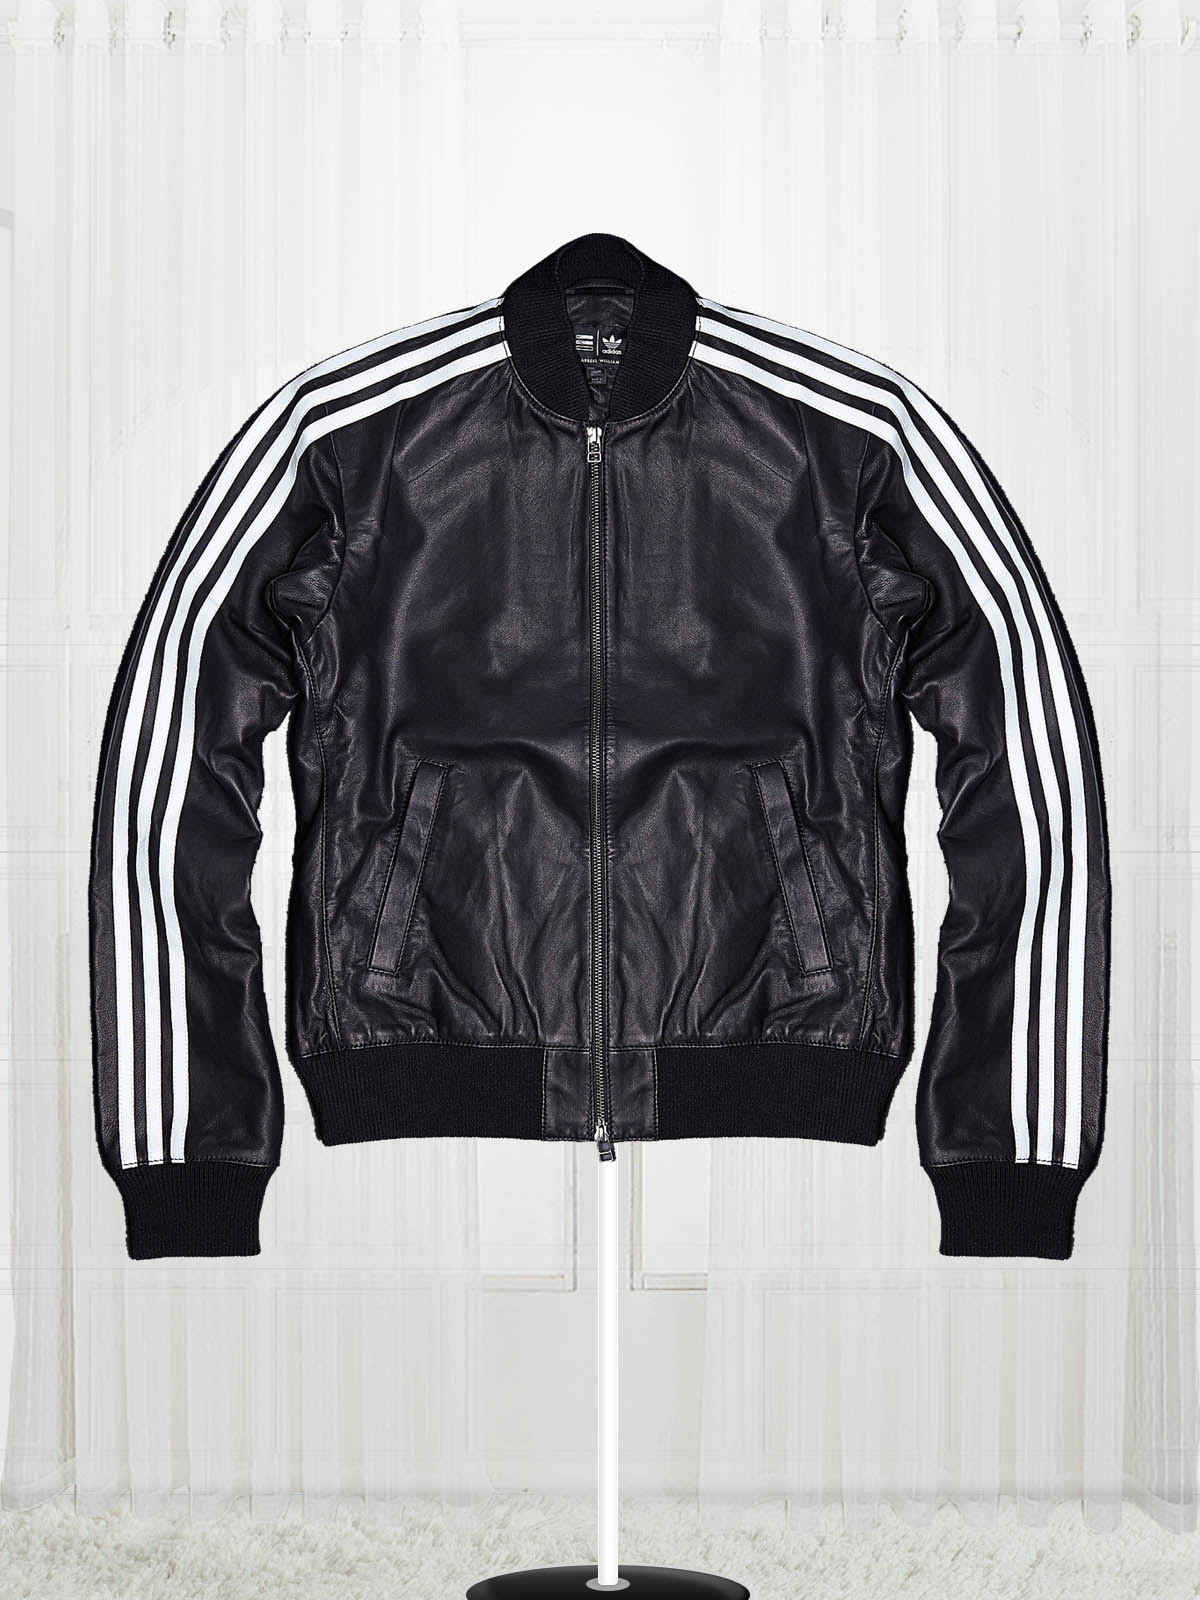 Pharrell Williams Jacket | Adidas Deal Jacket